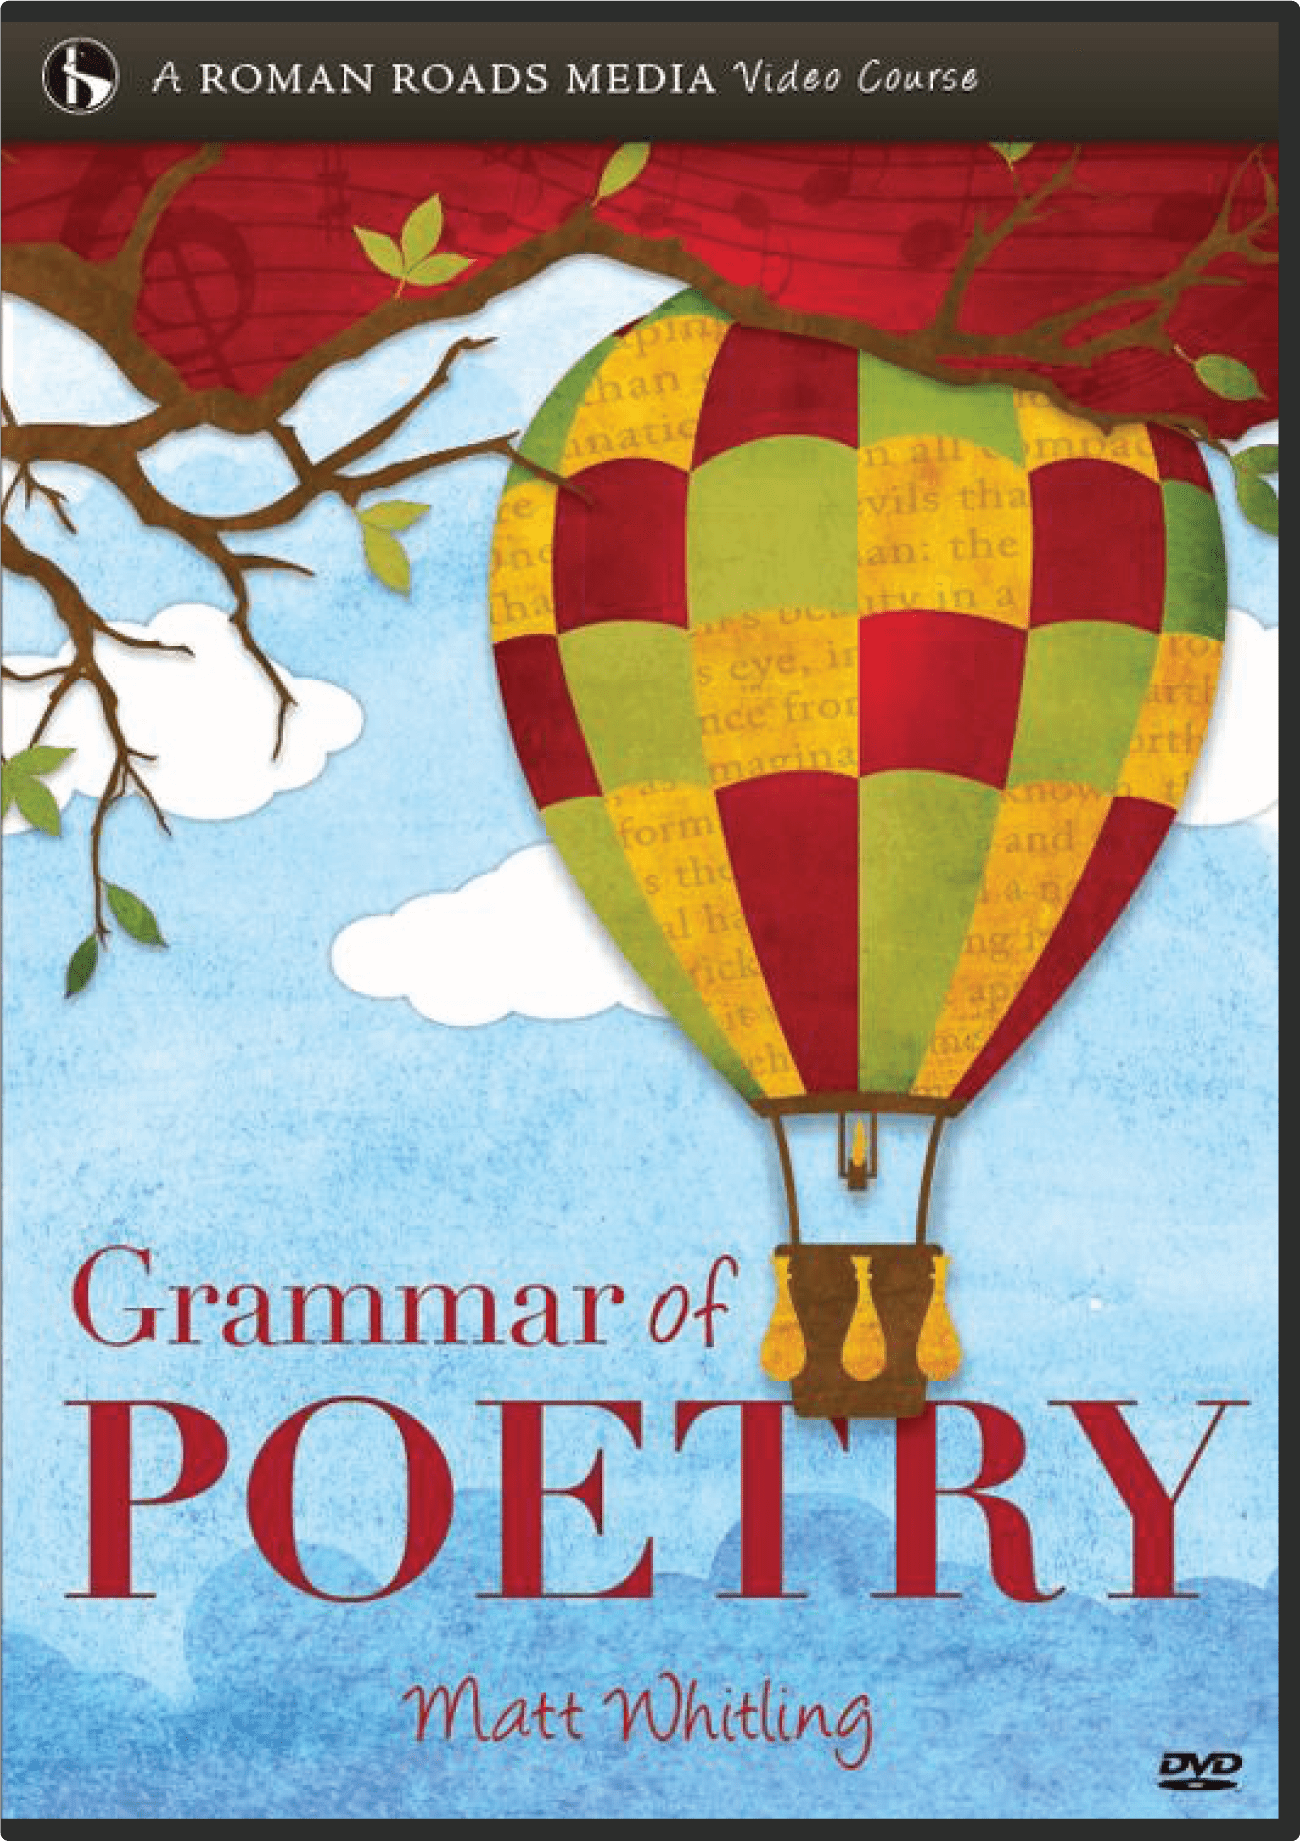 The Grammar of Poetry DVD